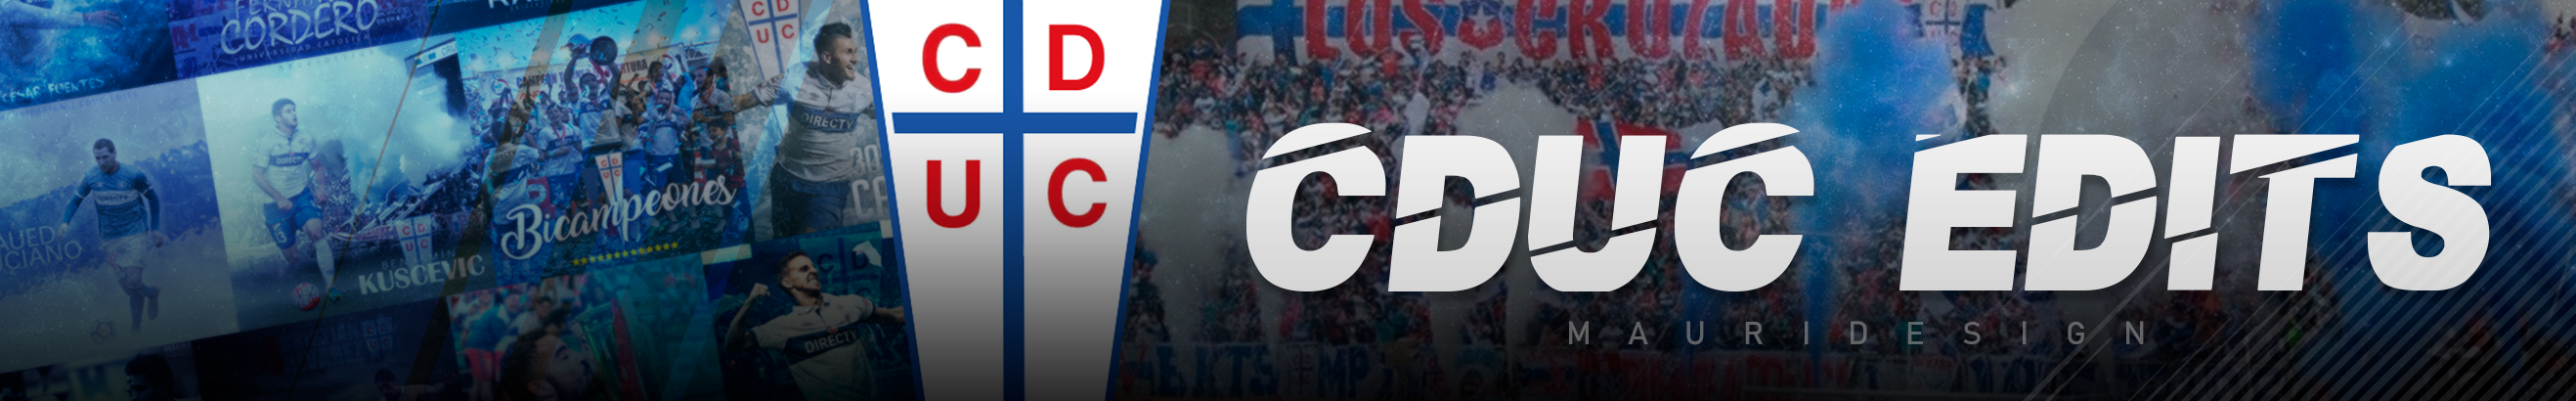 CDUC. EDITS's profile banner